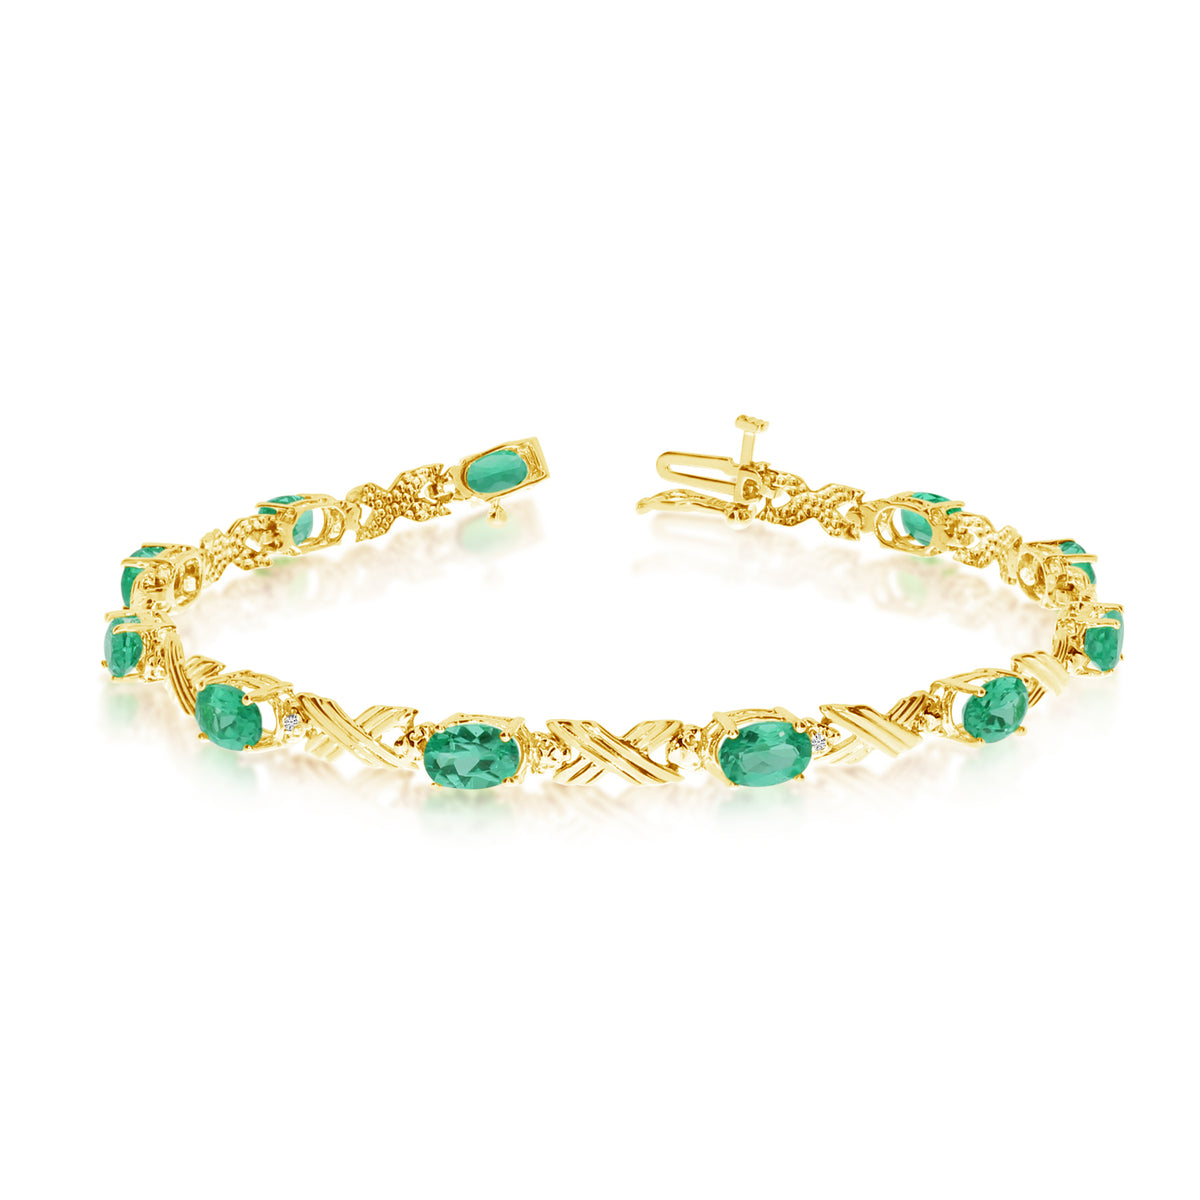 10K Yellow Gold Oval Emerald Stones And Diamonds Tennis Bracelet, 7" fine designer jewelry for men and women